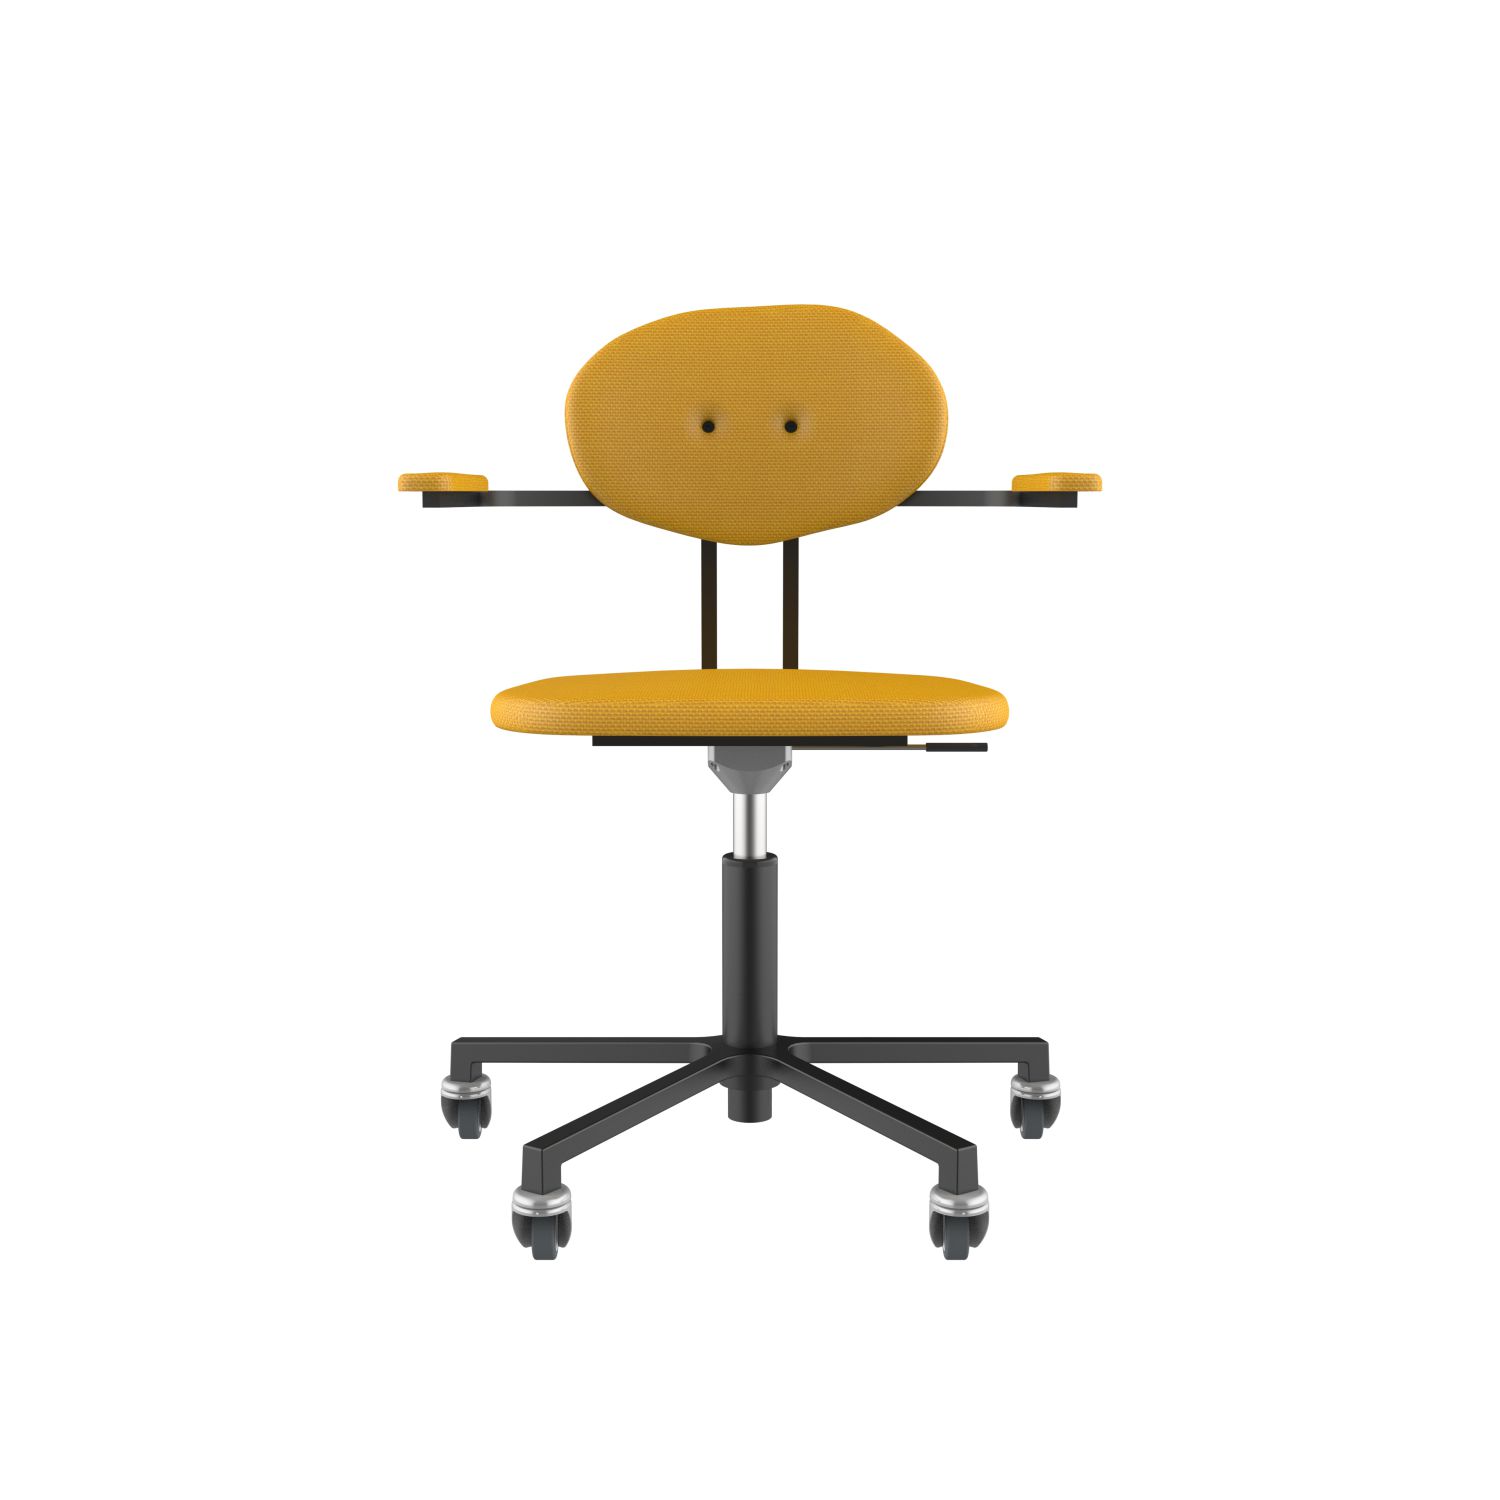 lensvelt maarten baas office chair with armrests backrest d lemon yellow 051 black ral9005 soft wheels